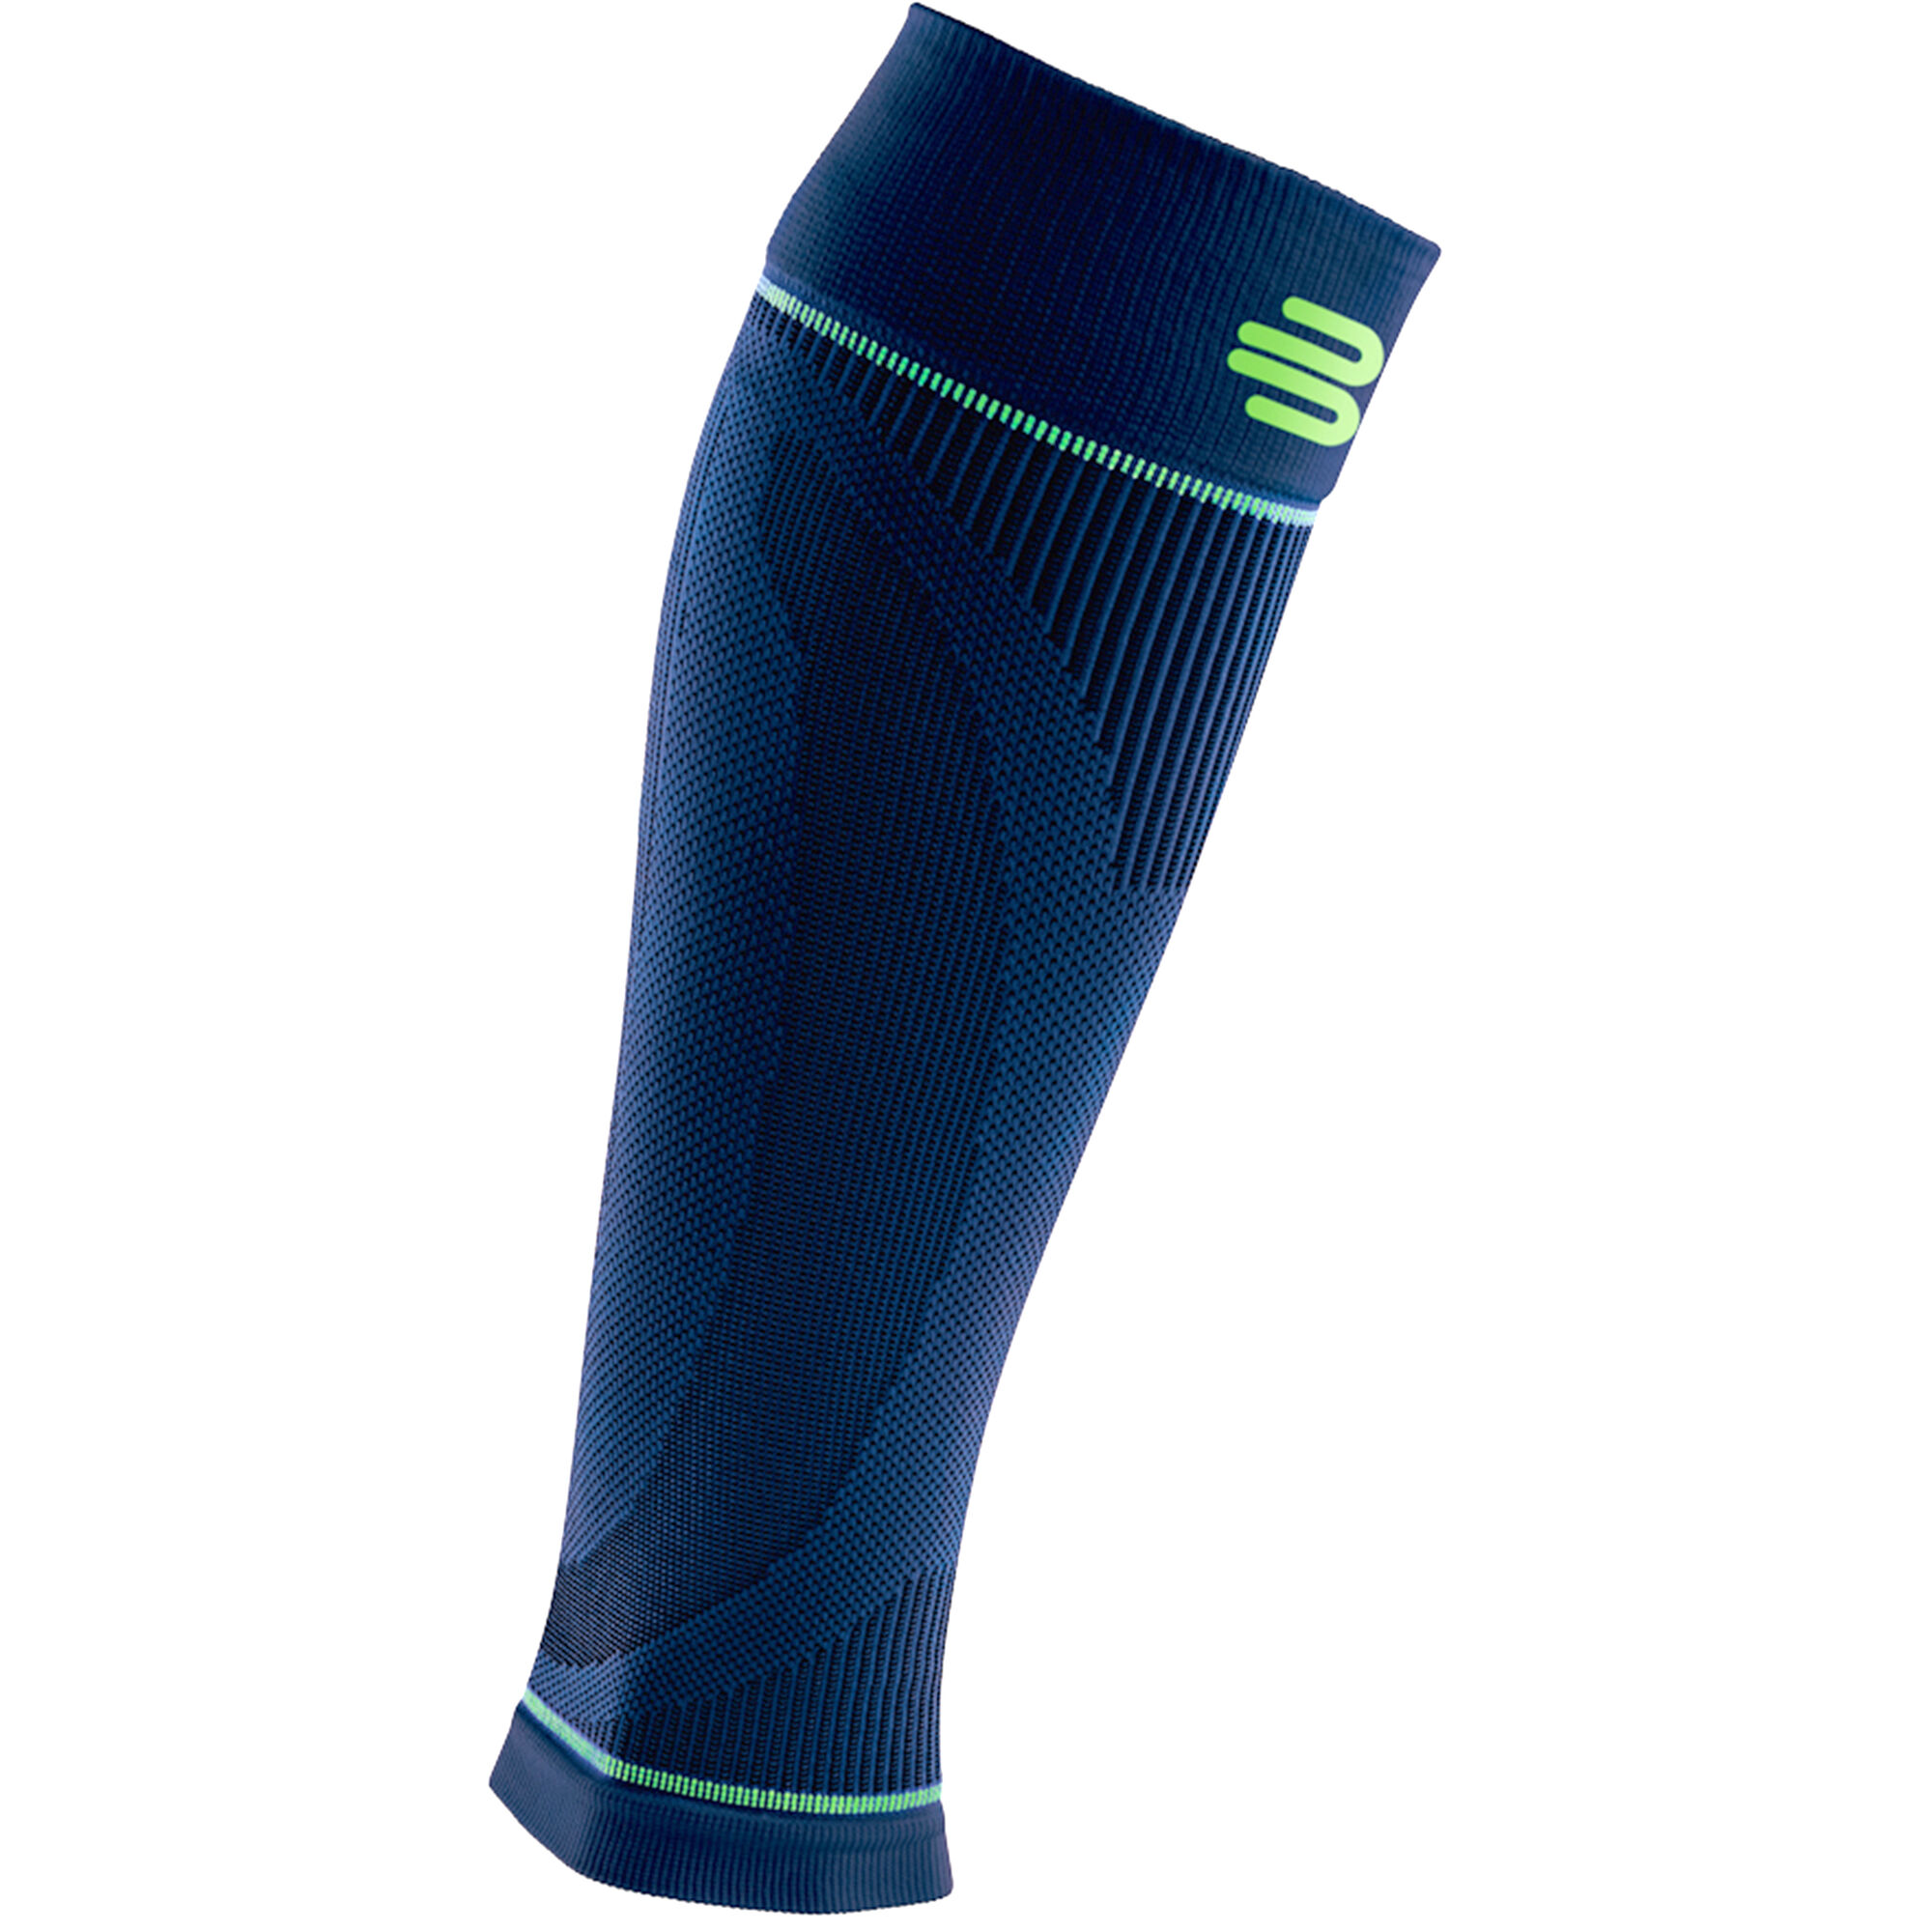 Buy Bauerfeind Sports Compression Lower Leg (x-long) Sleeve Blue online